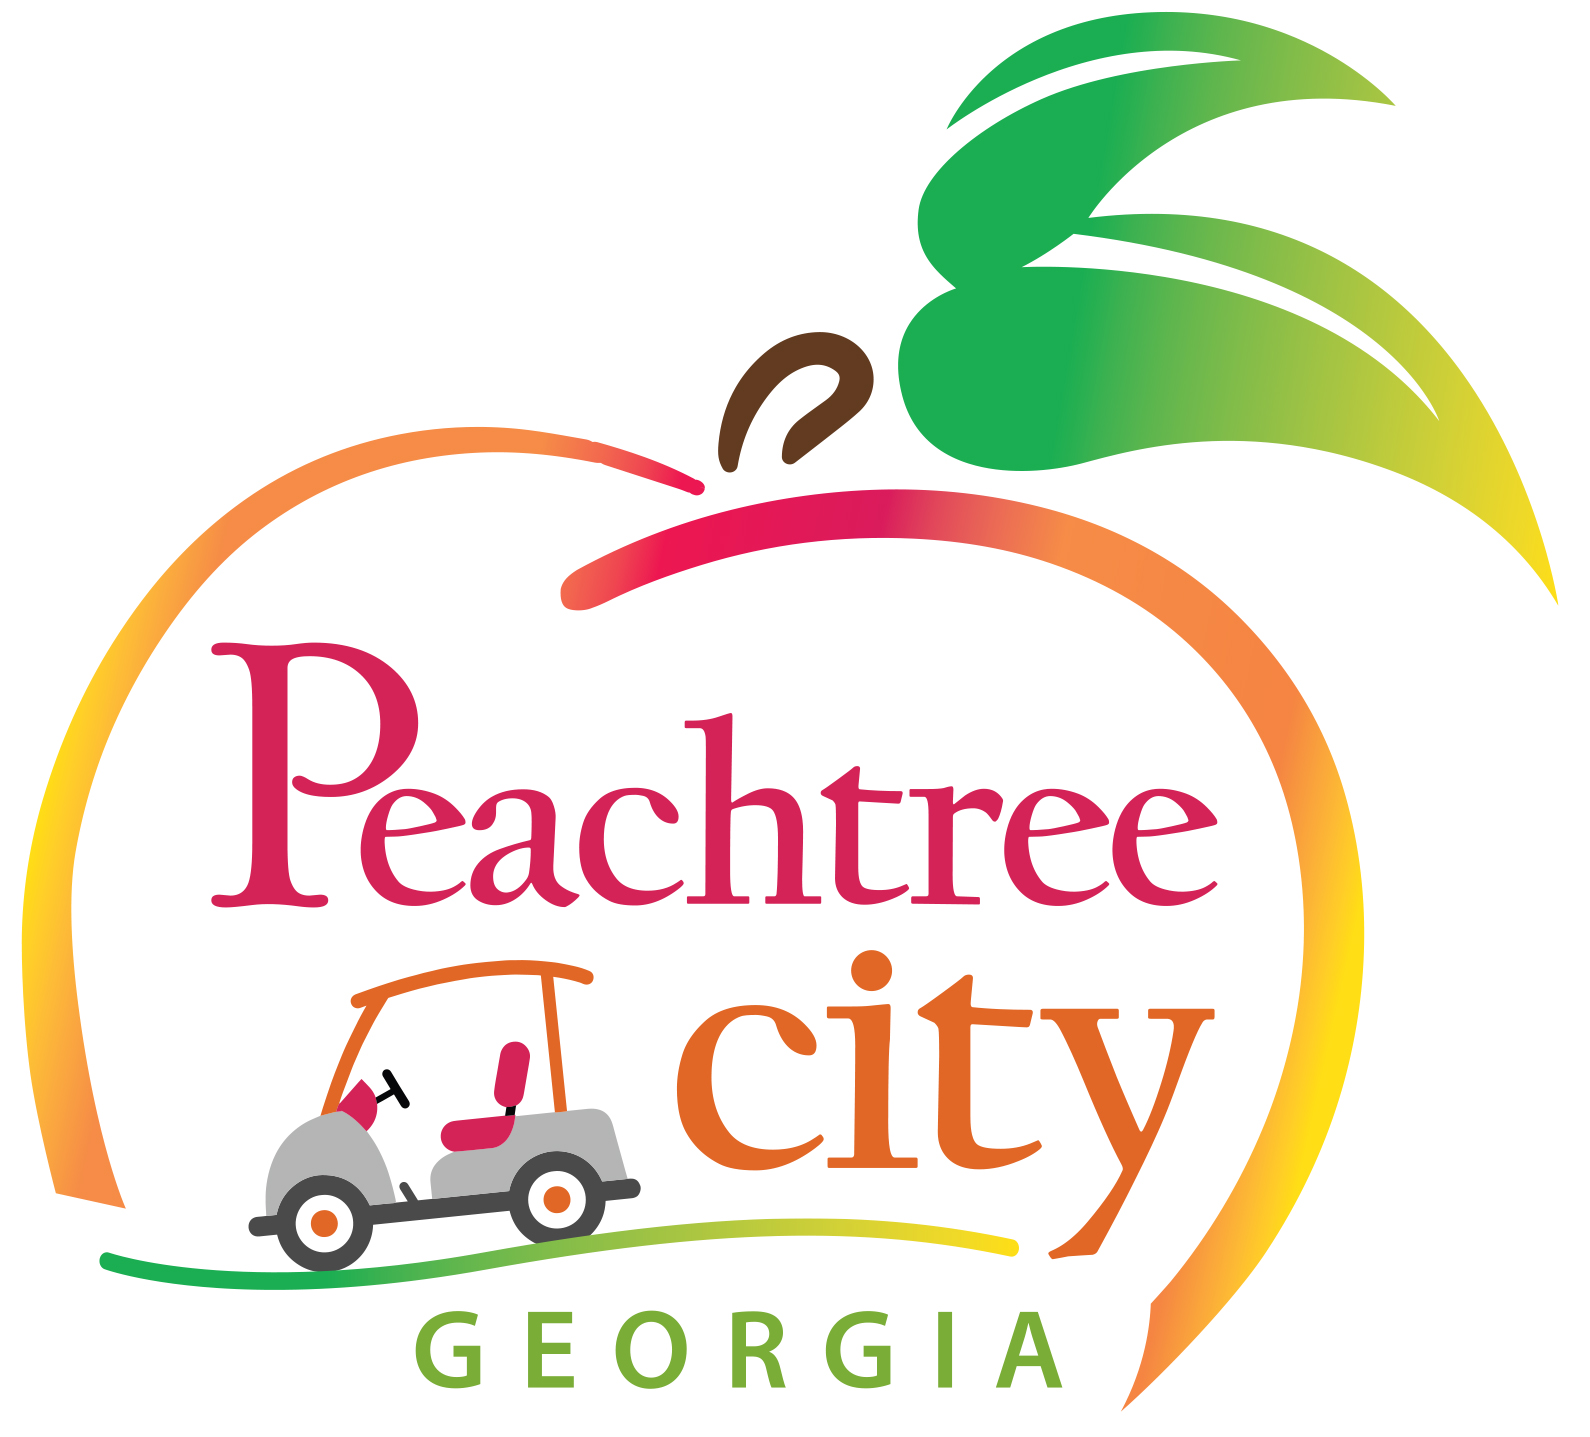 peach tree logo